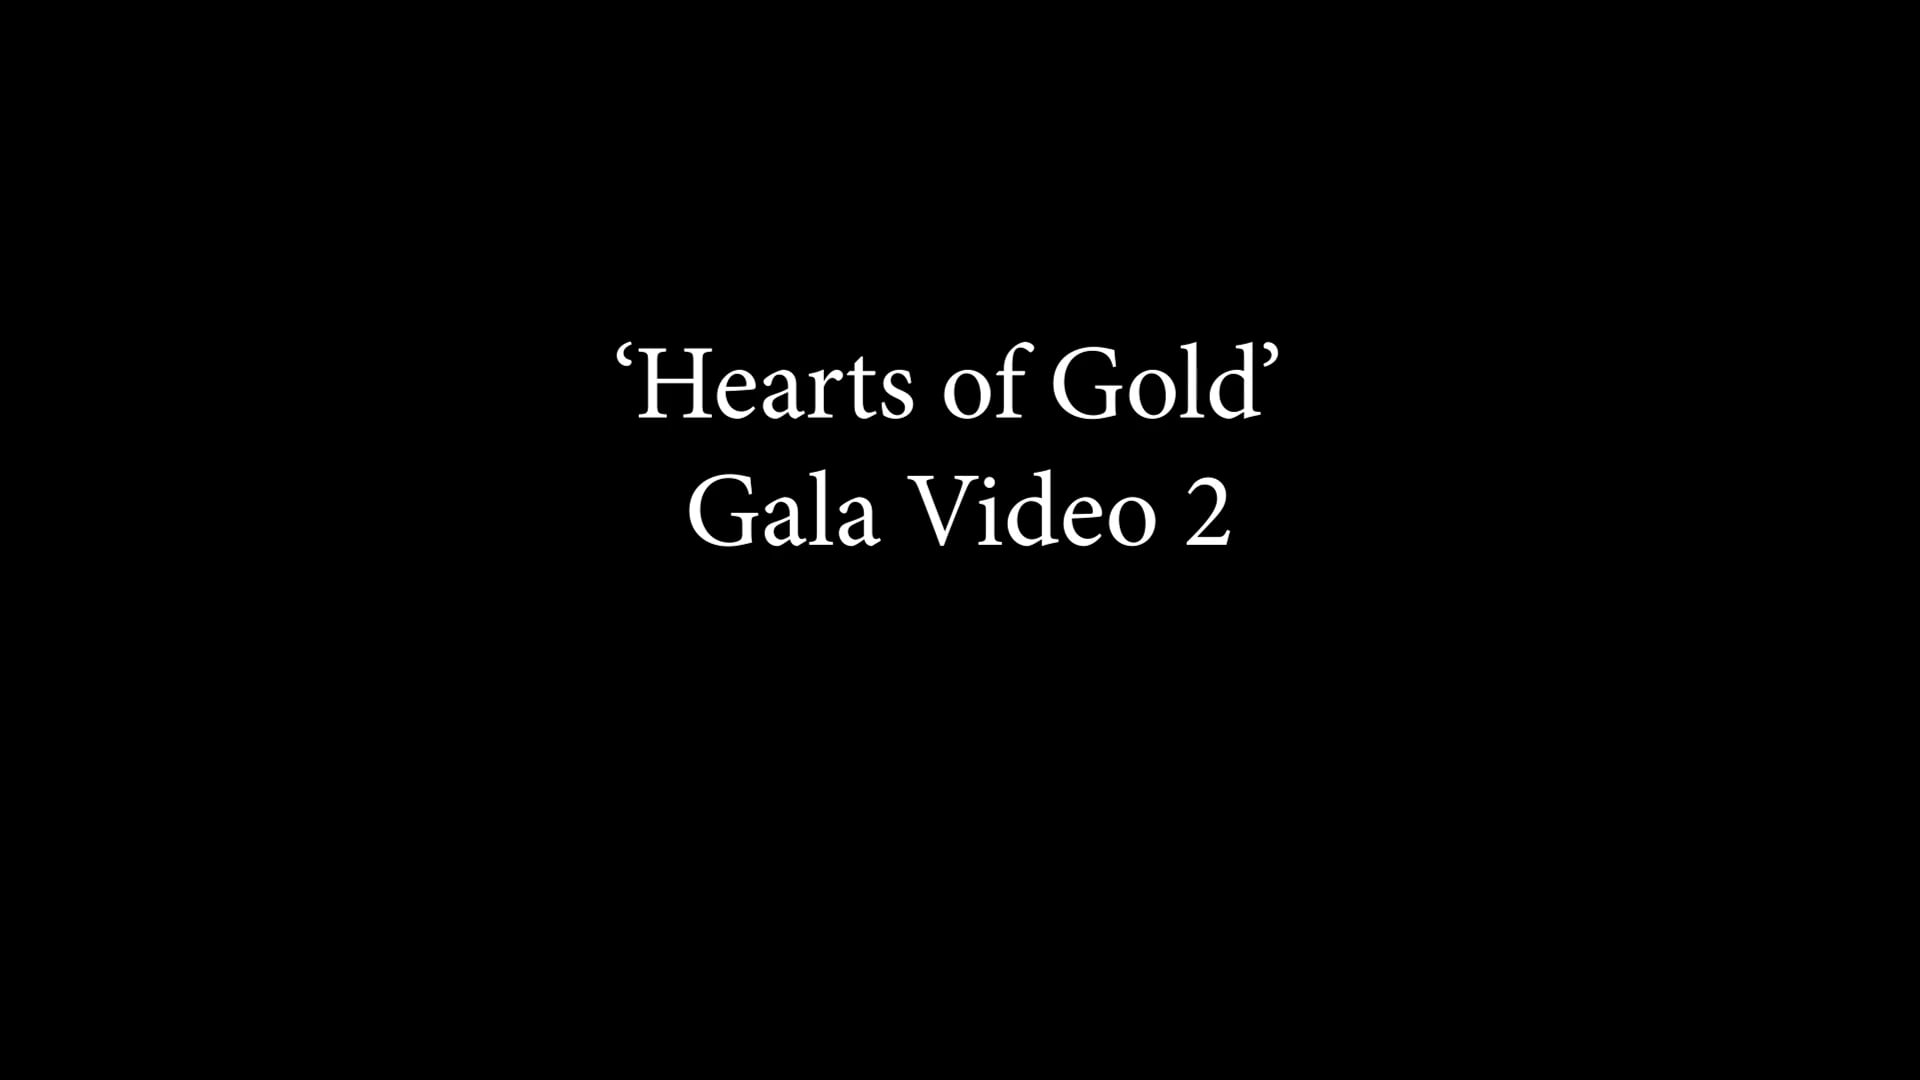 Gala Video 2